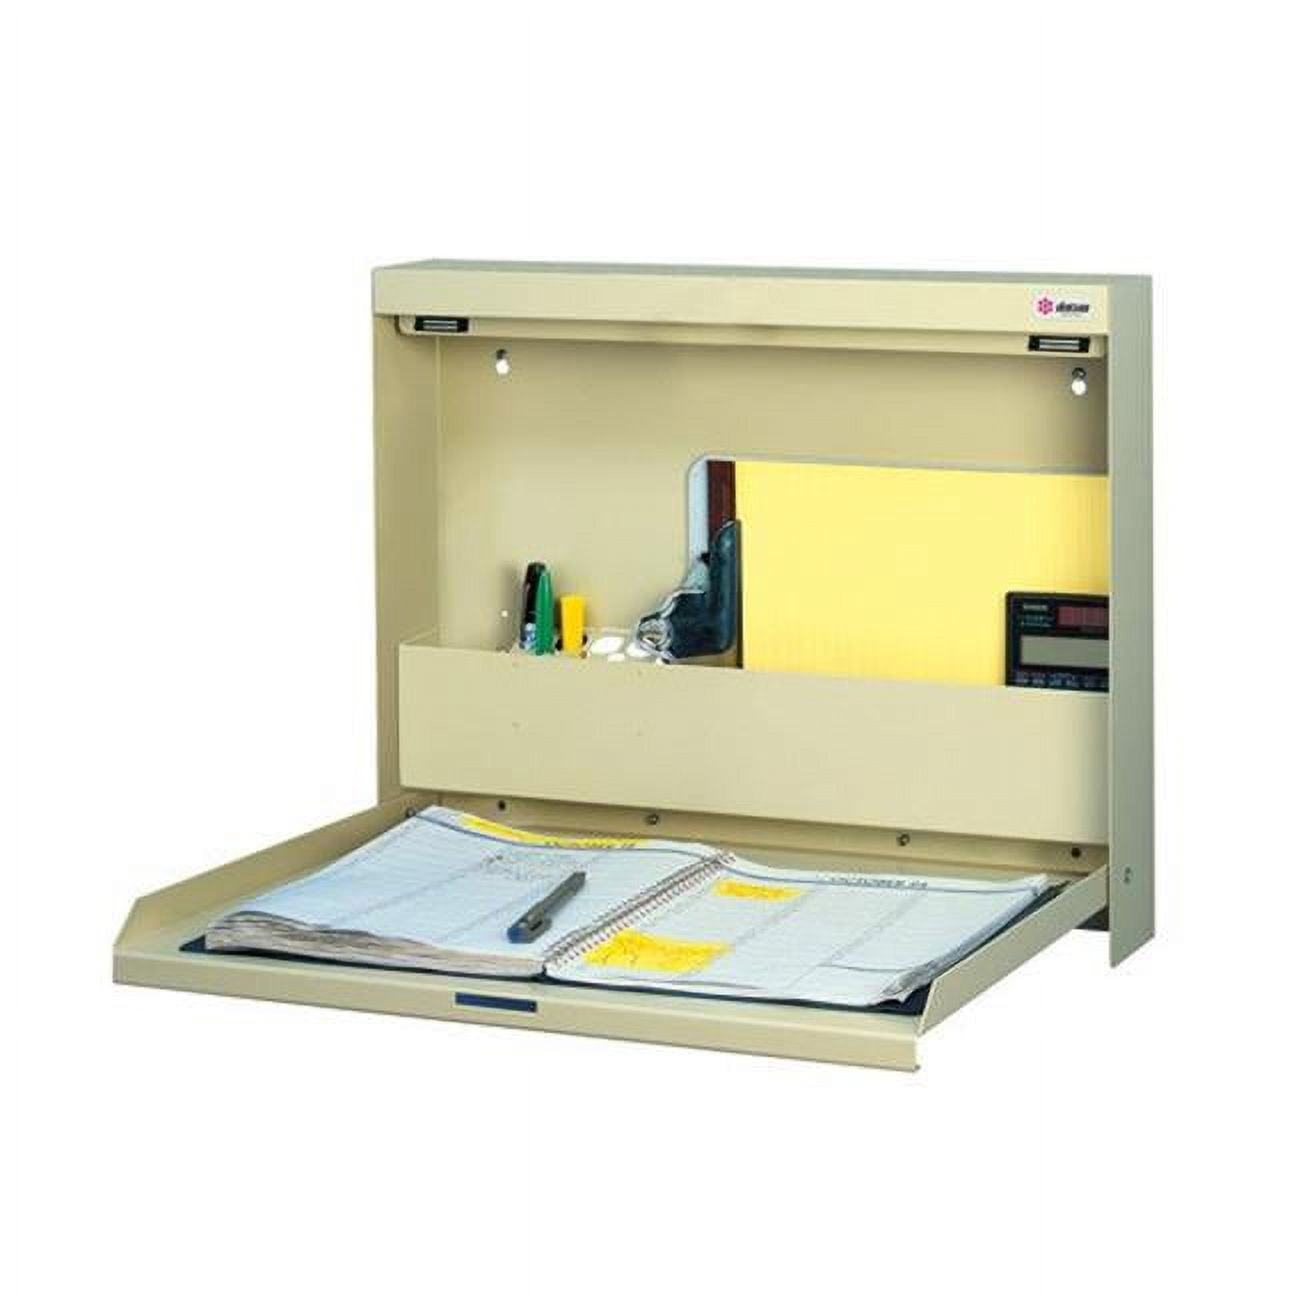 Datum Storage Ww-100ch Fold-up Desks Models With Locking Chart Holder